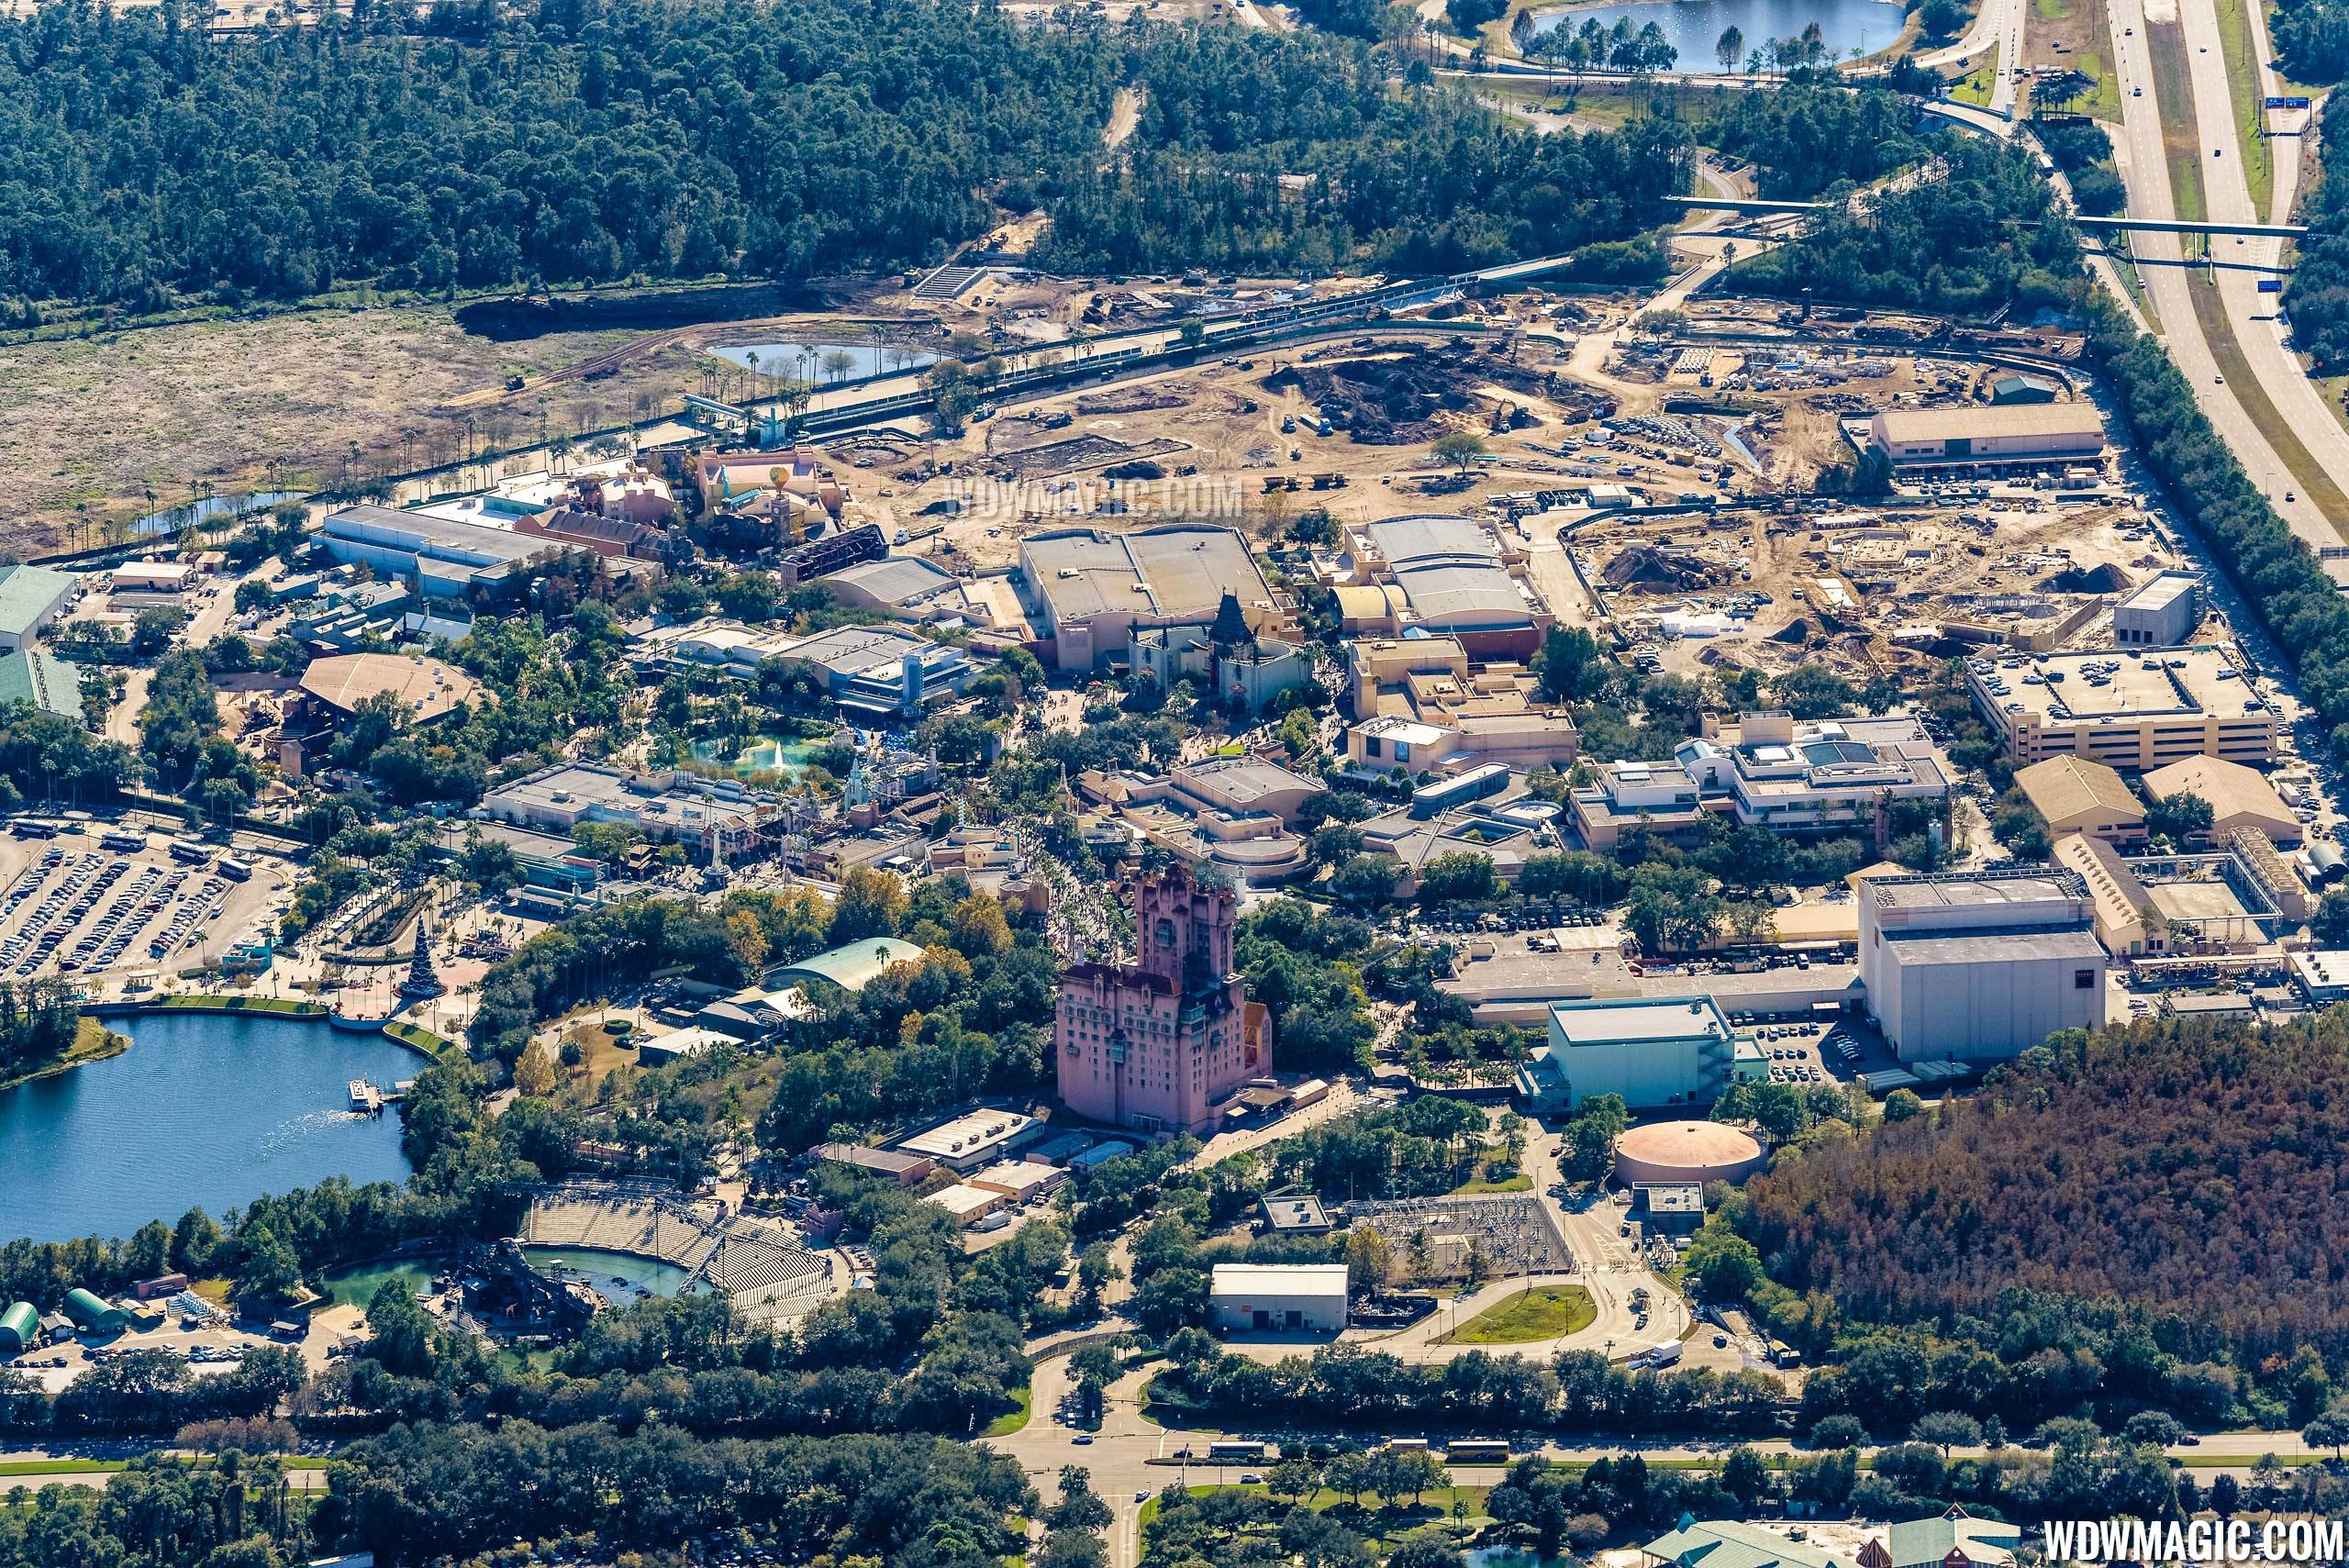 PHOTOS - Bird's-eye view of Star Wars Land construction at Disney's Hollywood Studios